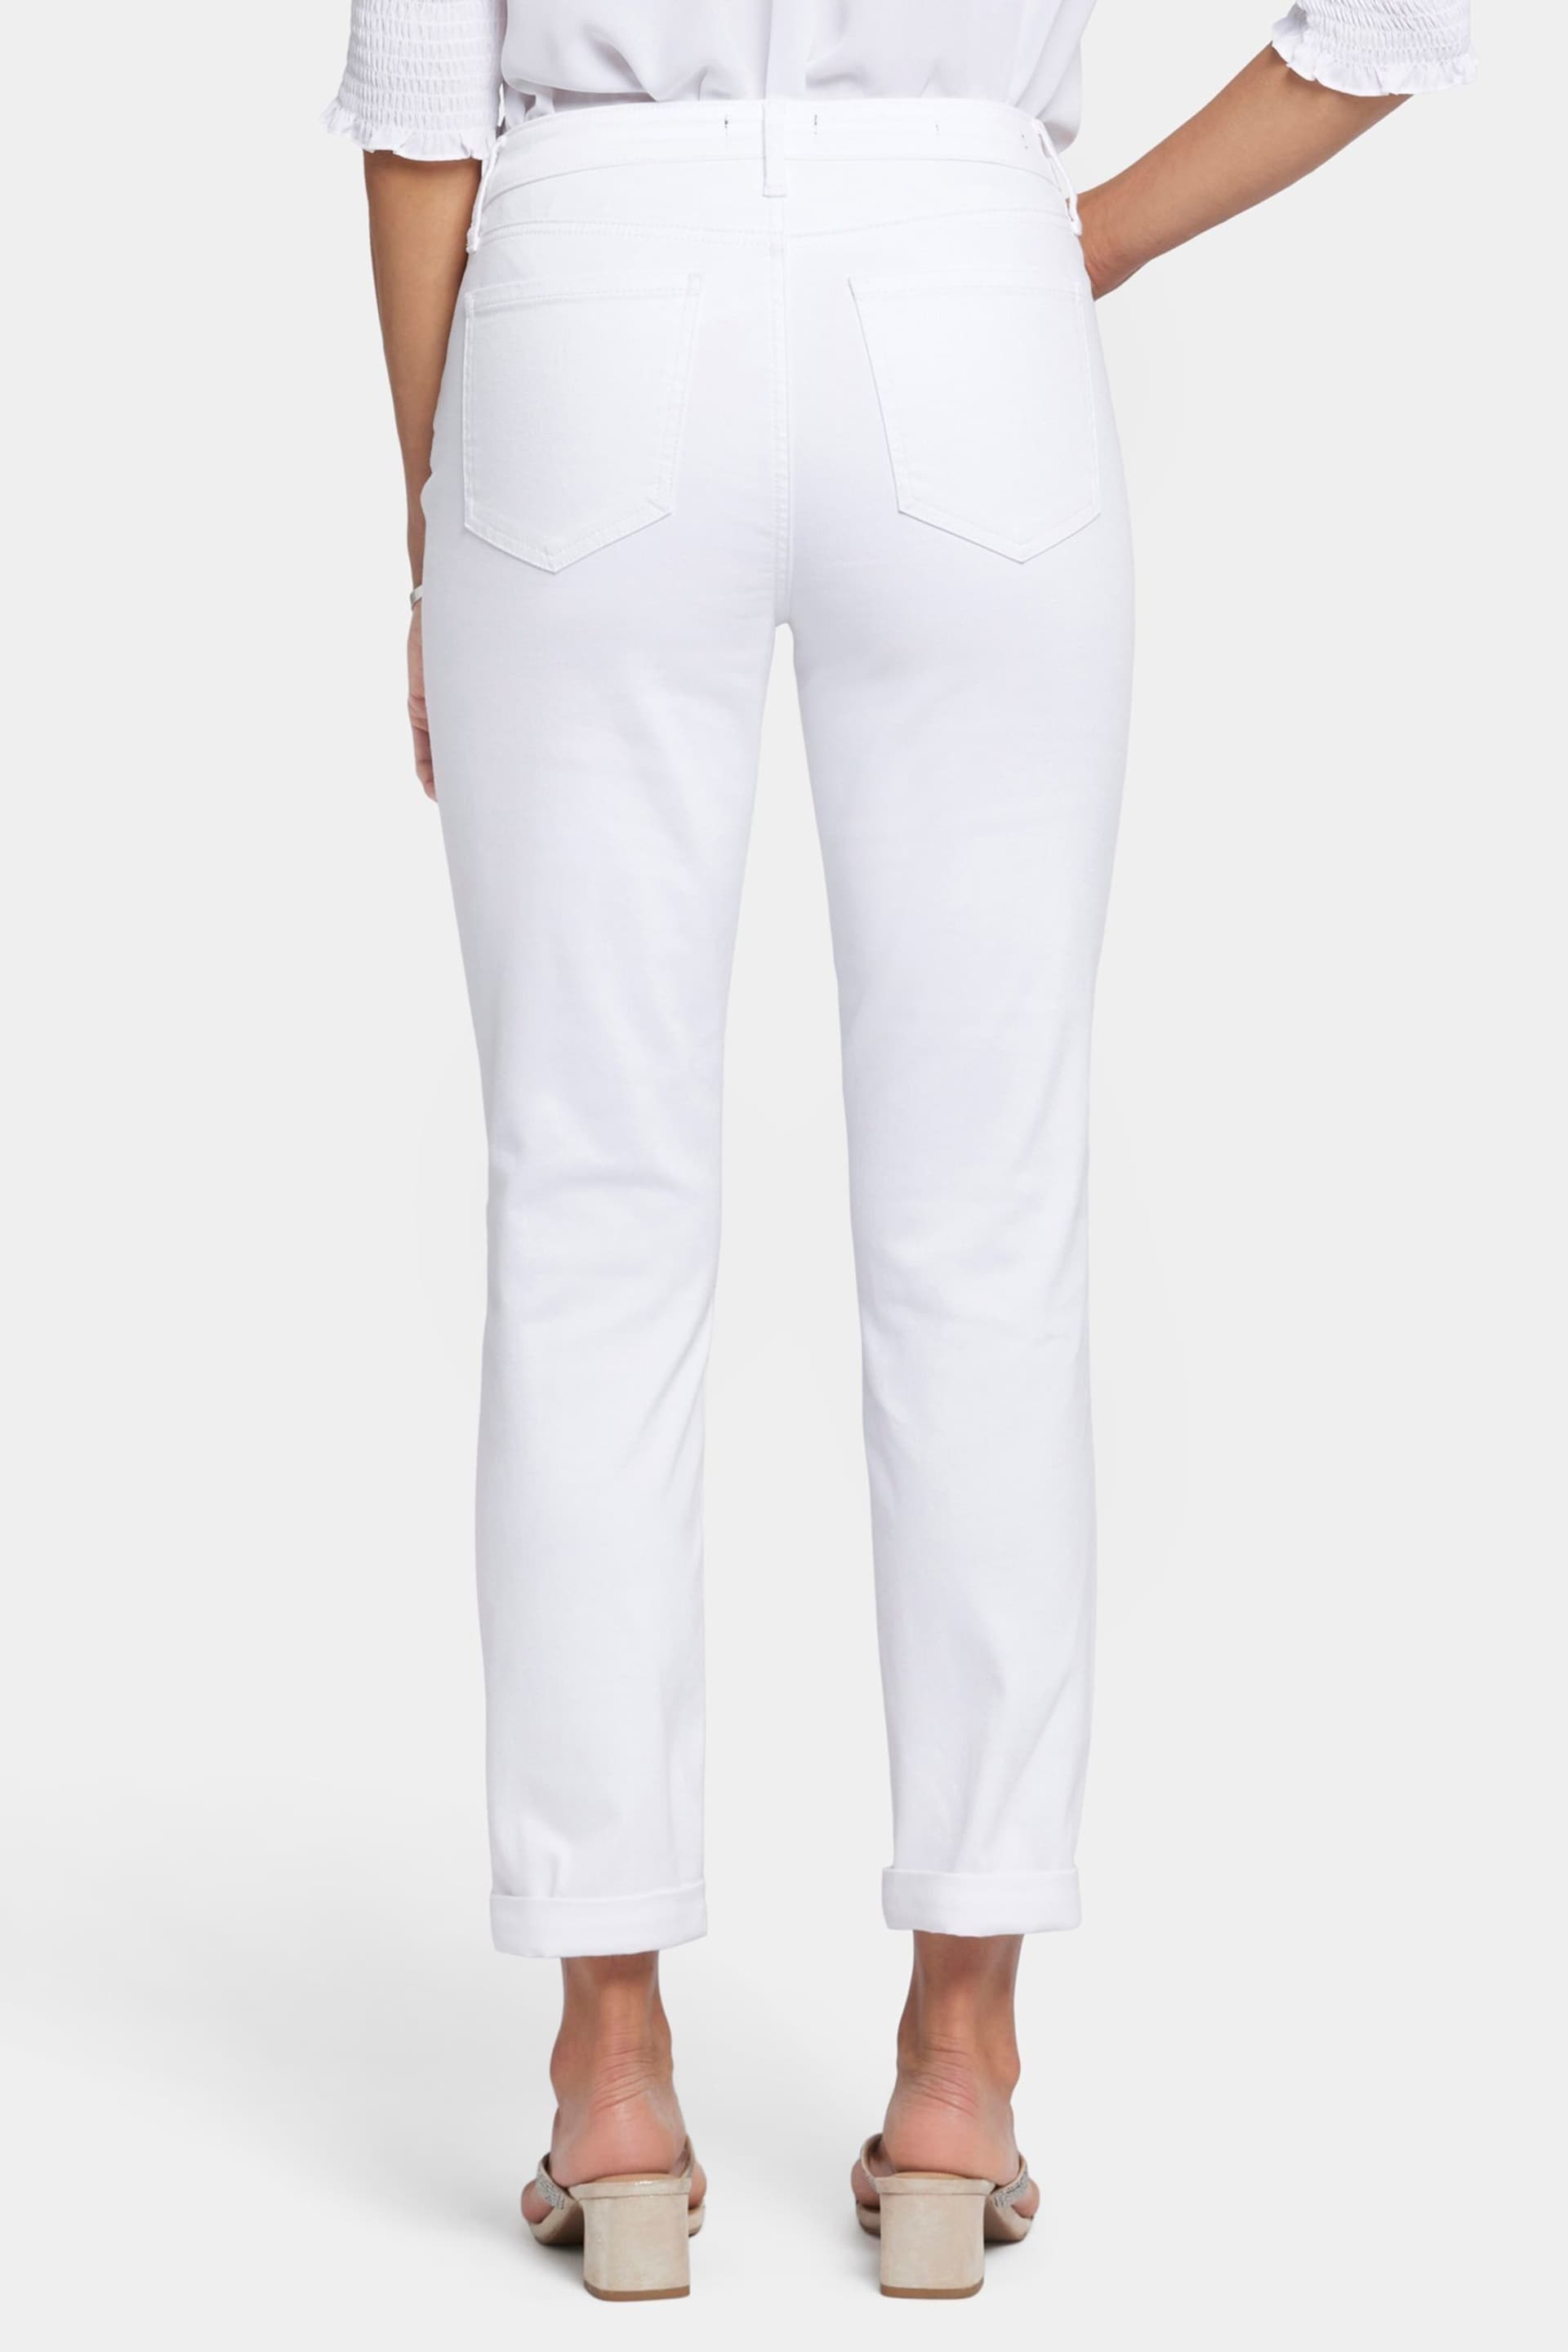 NYDJ Margot Girlfriend White Jeans - Image 2 of 7